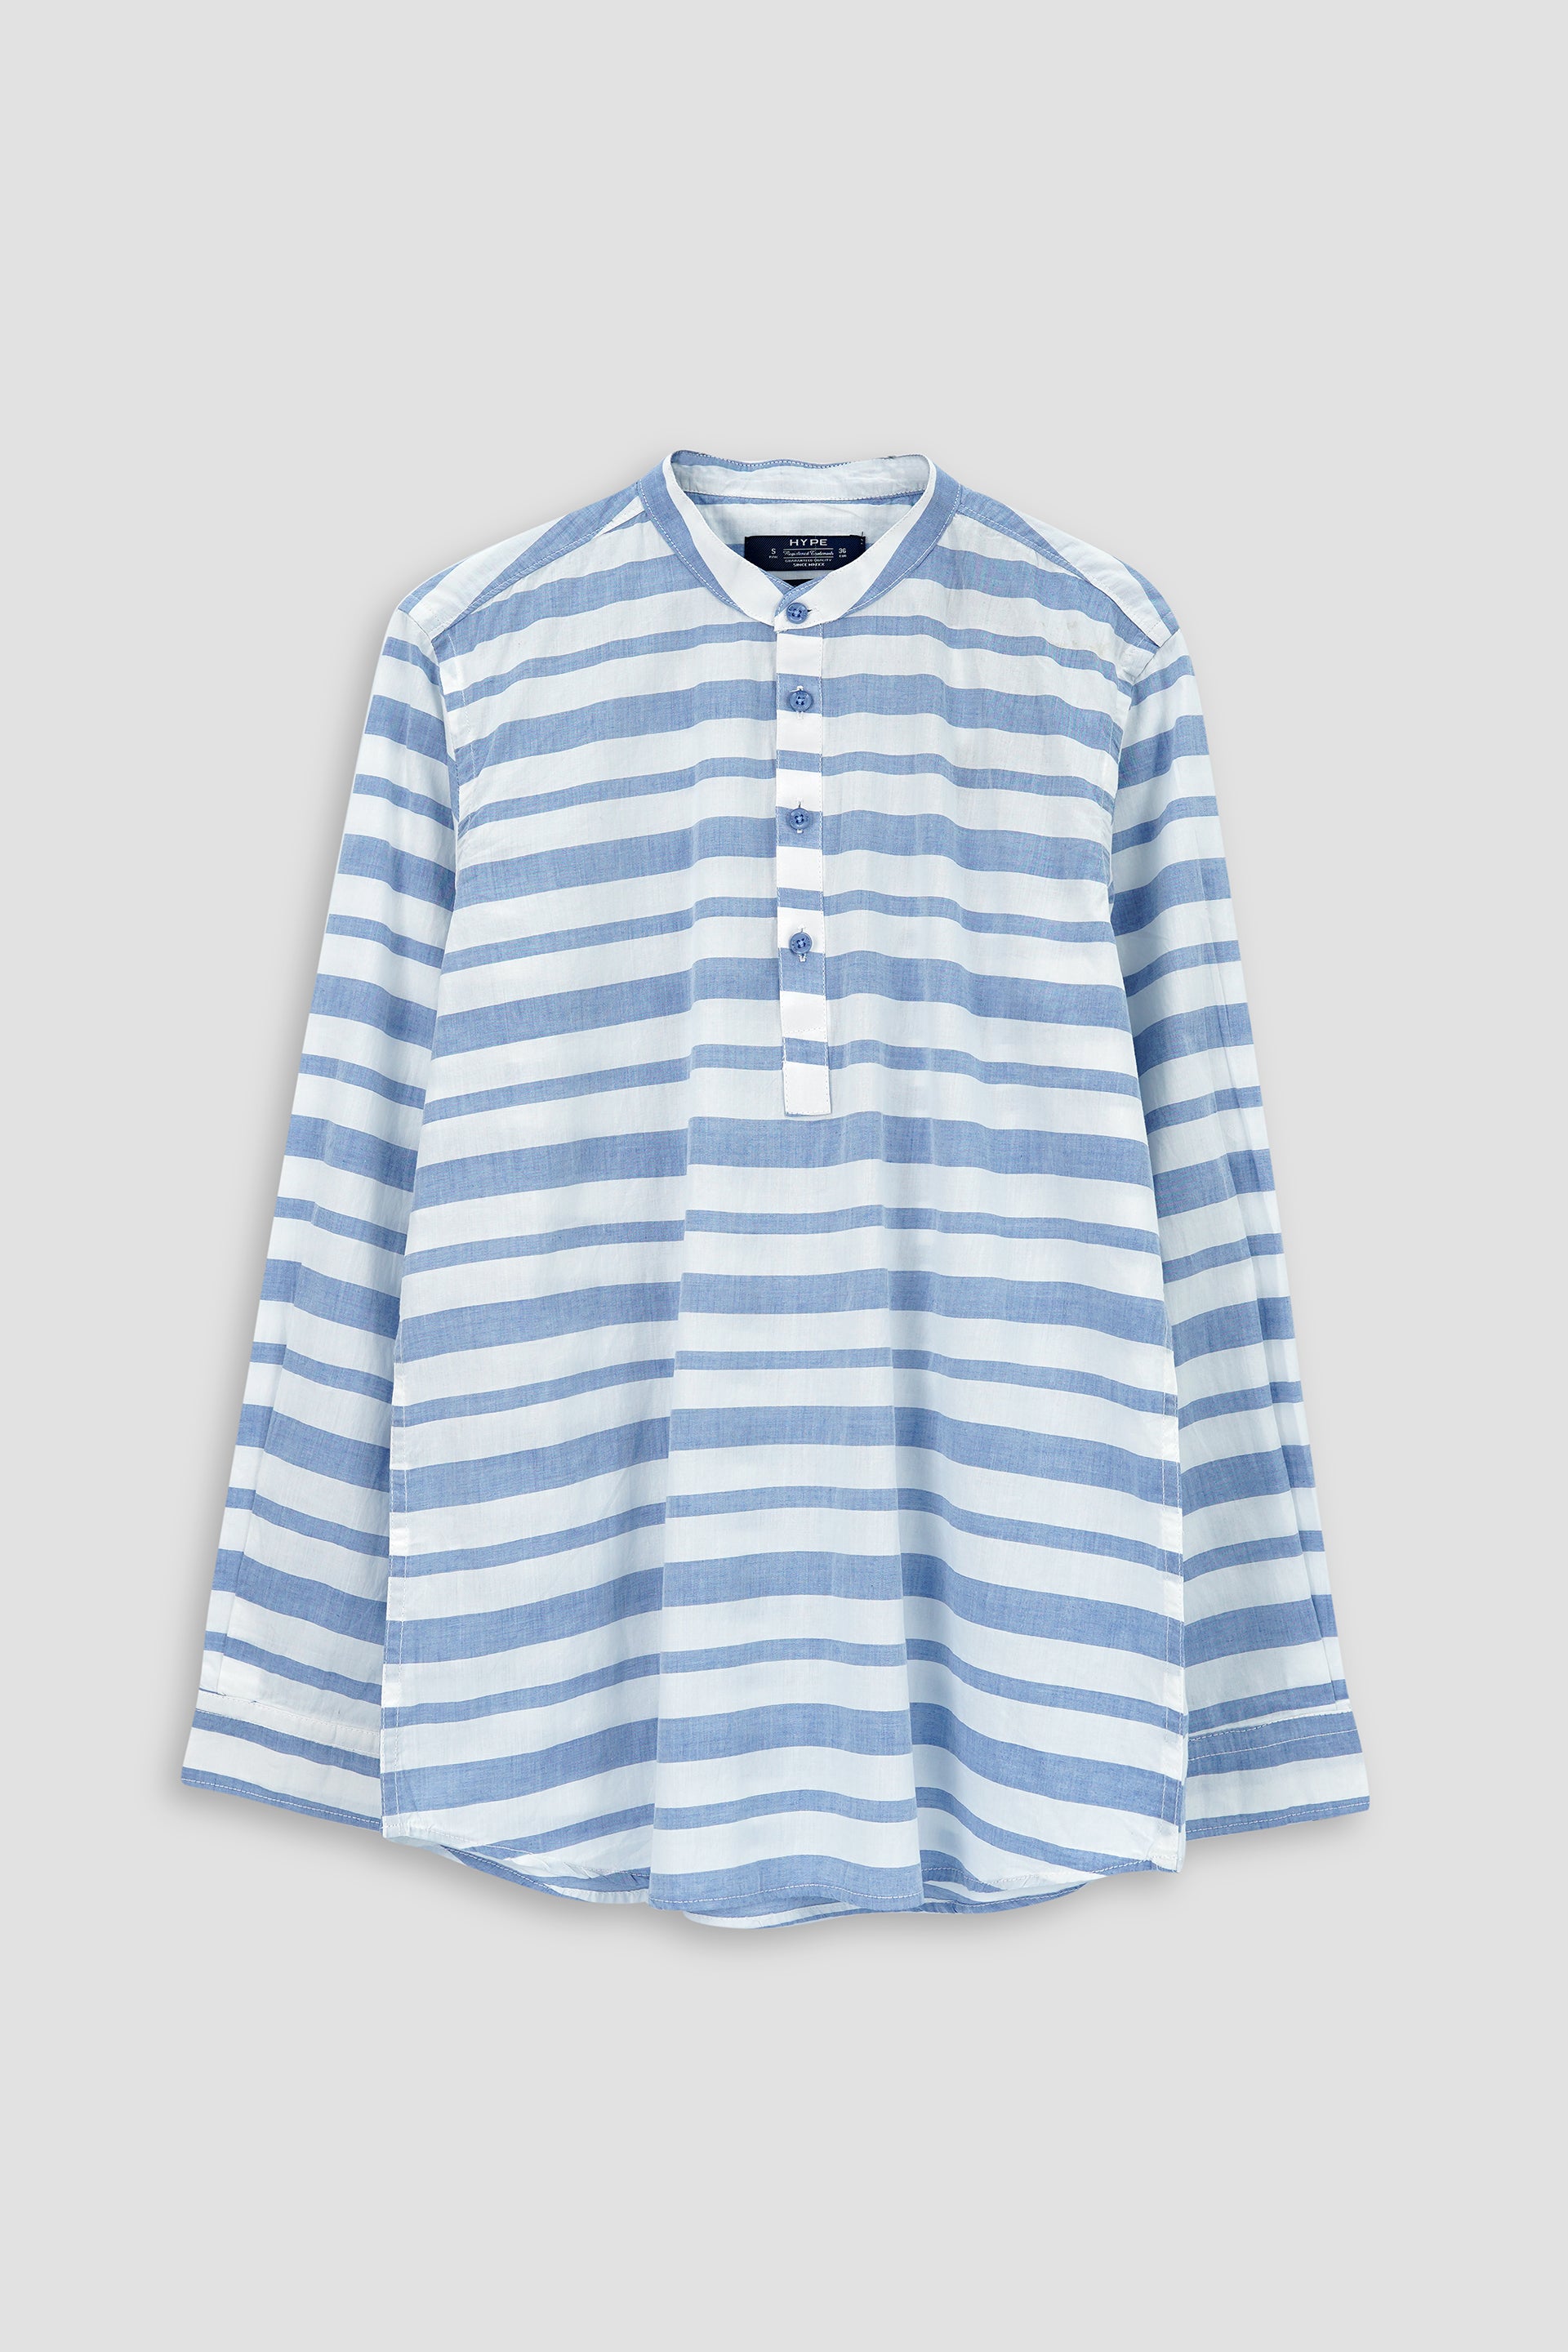 Mens Soft Cotton Stripes Casual Shirt 002427